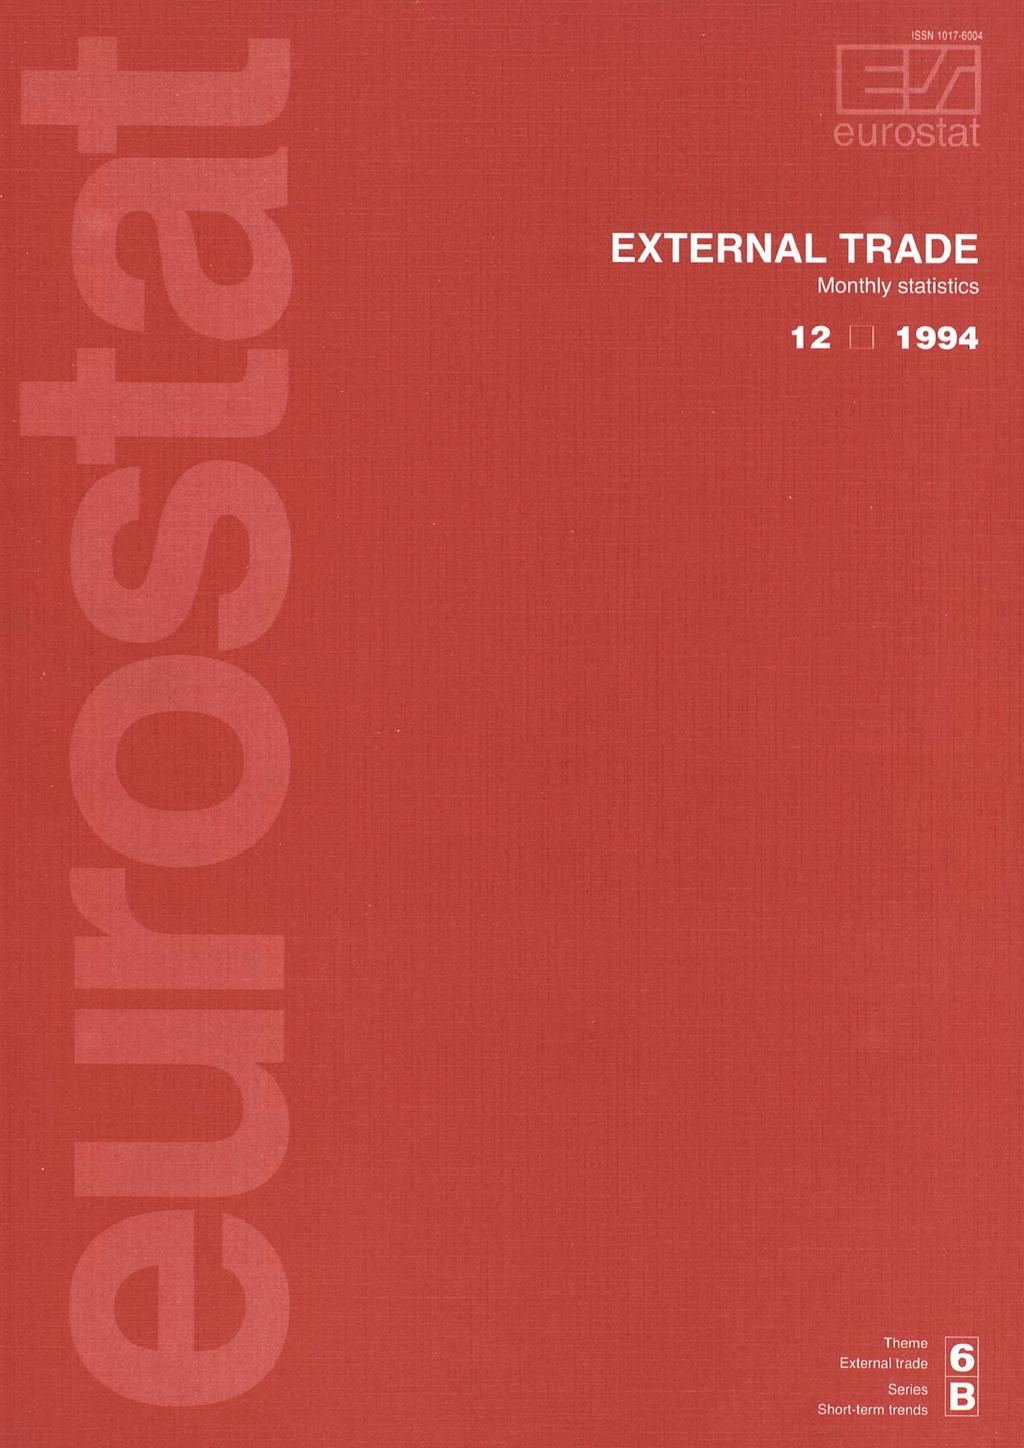 Theme External trade